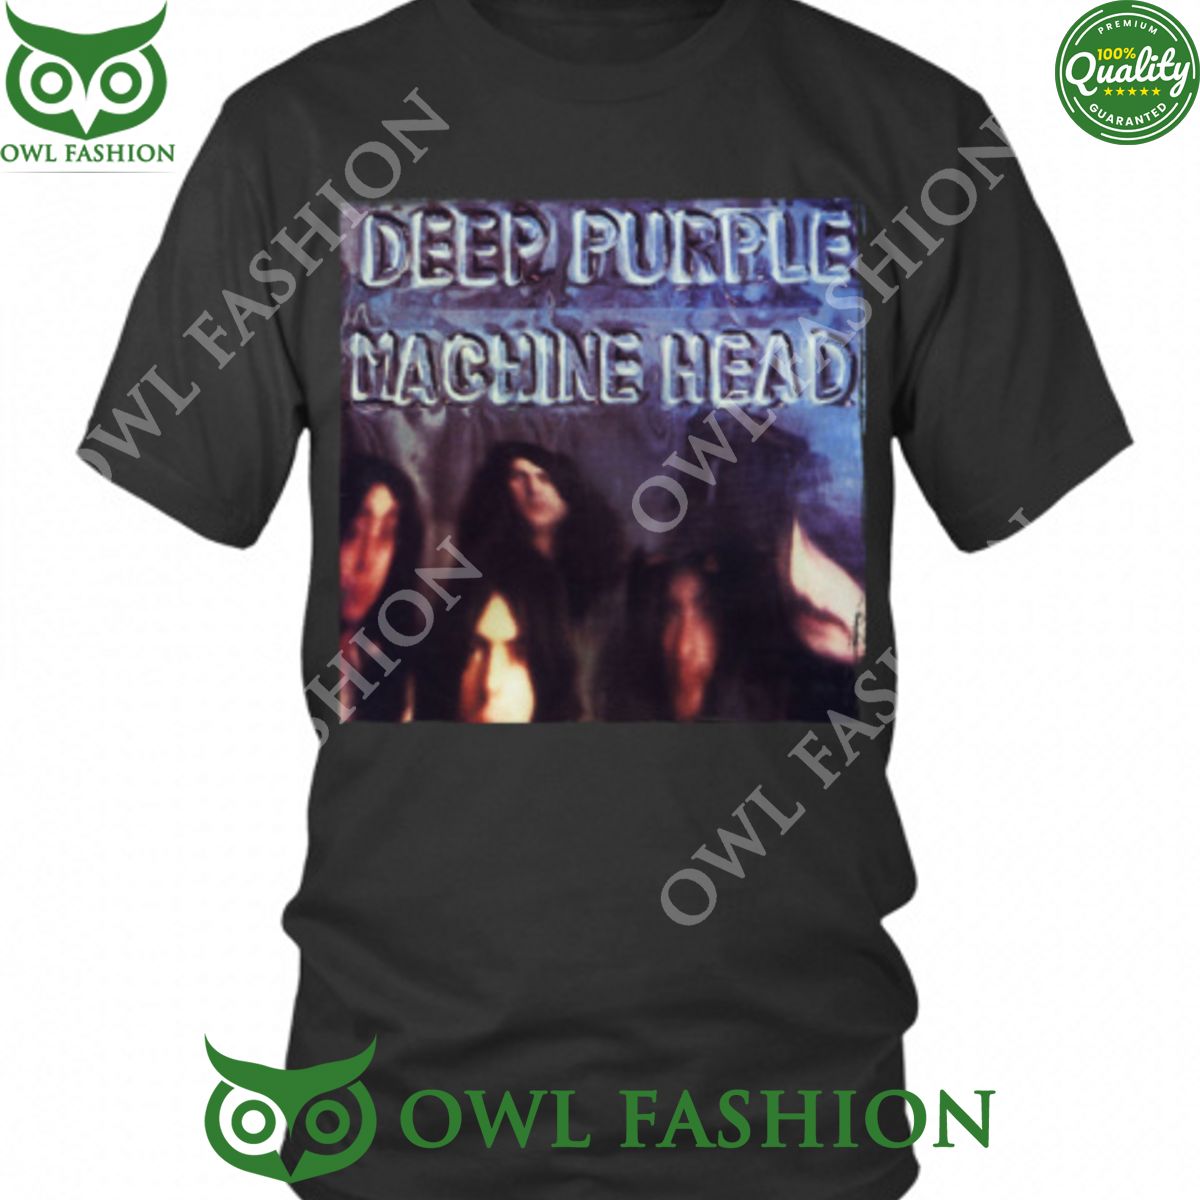 Deep Purple Machine Head Album Rock Band t shirt Eye soothing picture dear